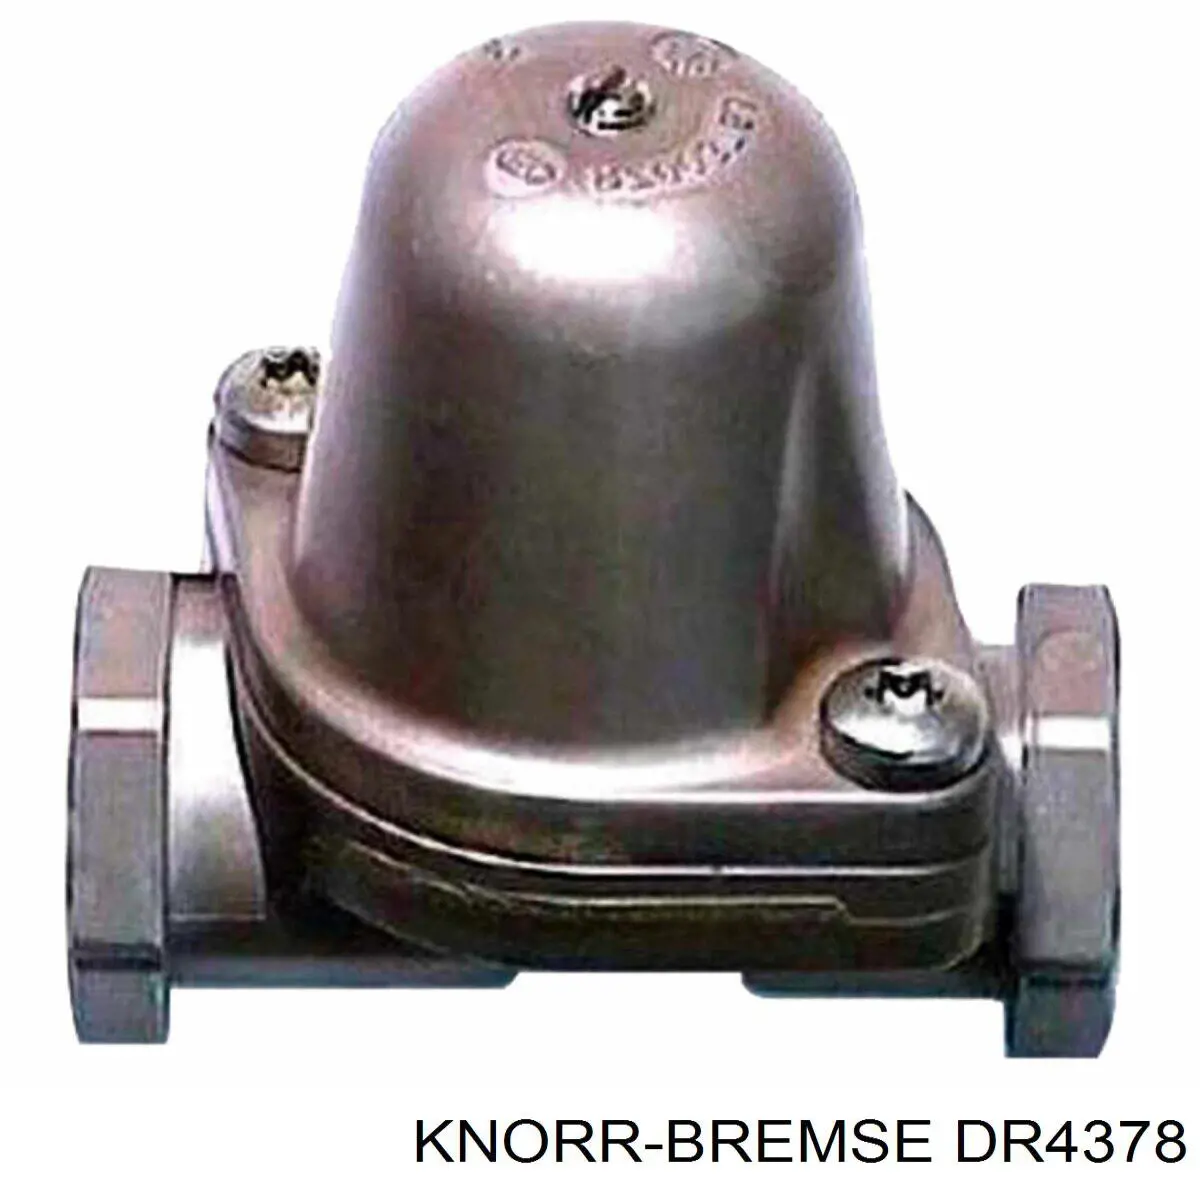 DR 4378 Knorr-bremse перепускной клапан (байпас наддувочного воздуха)